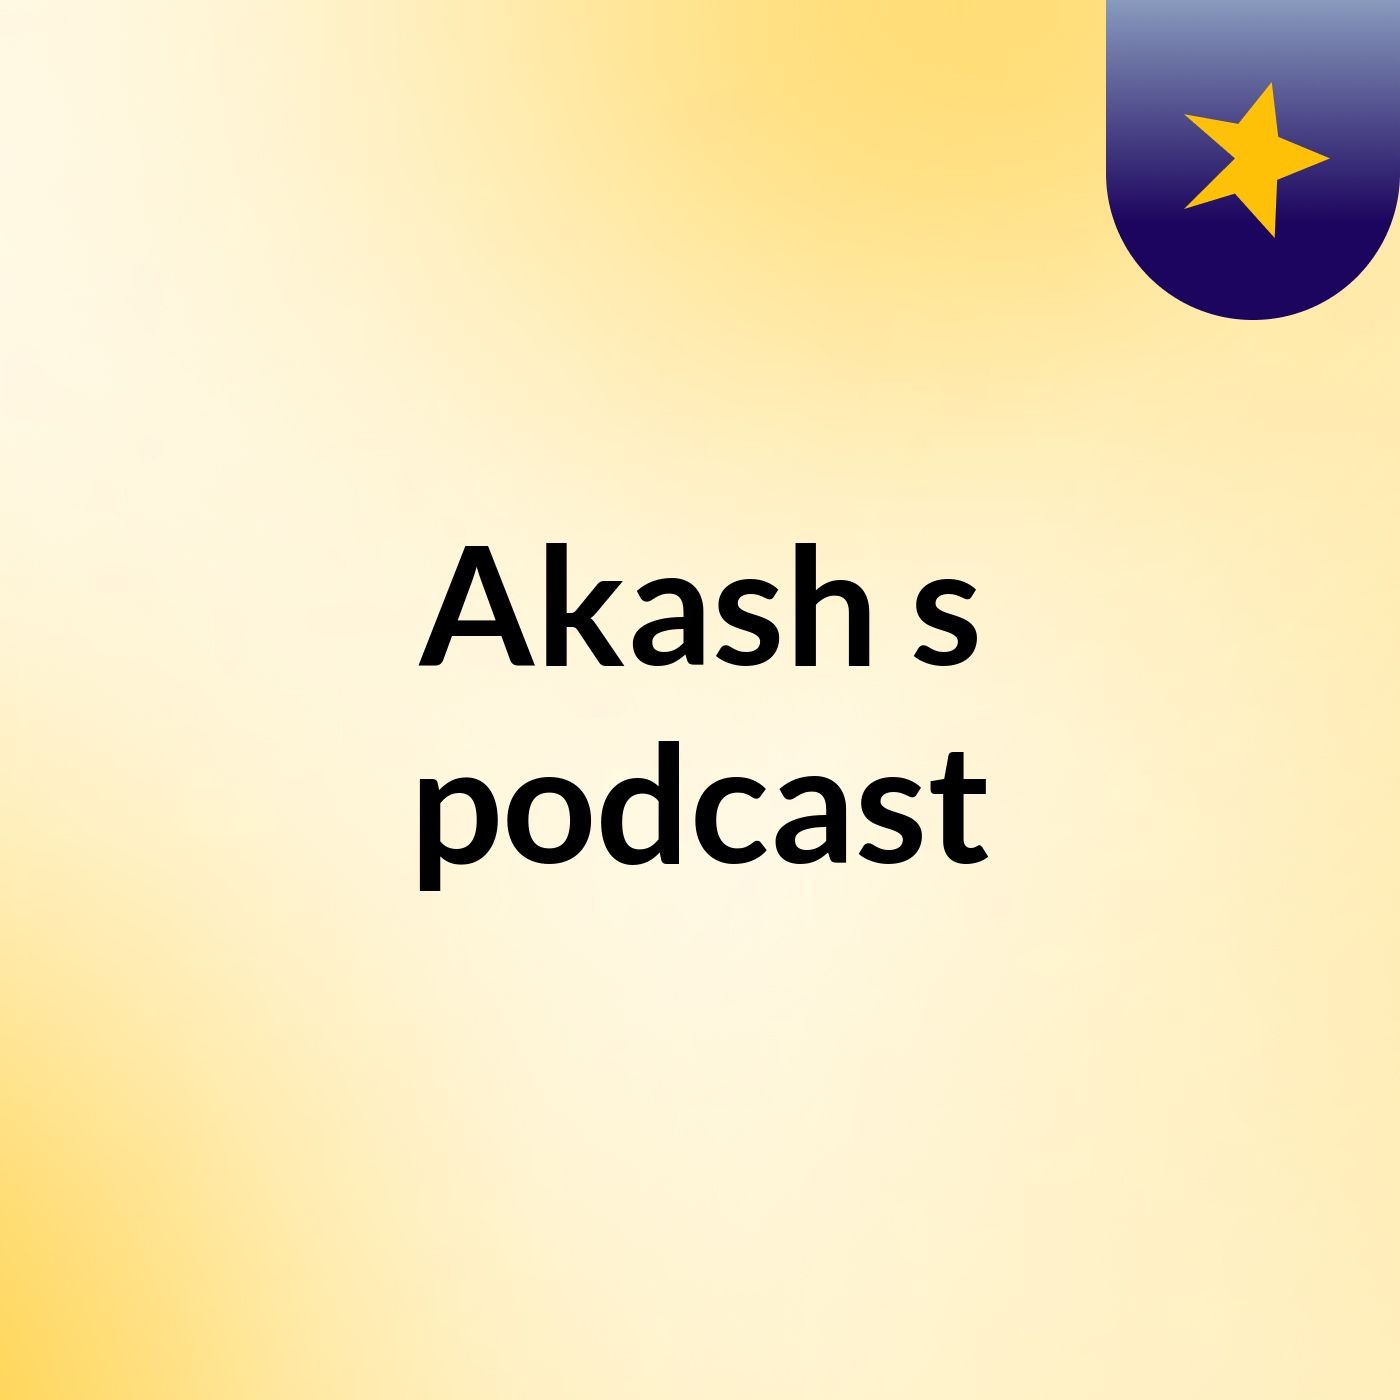 Akash's podcast